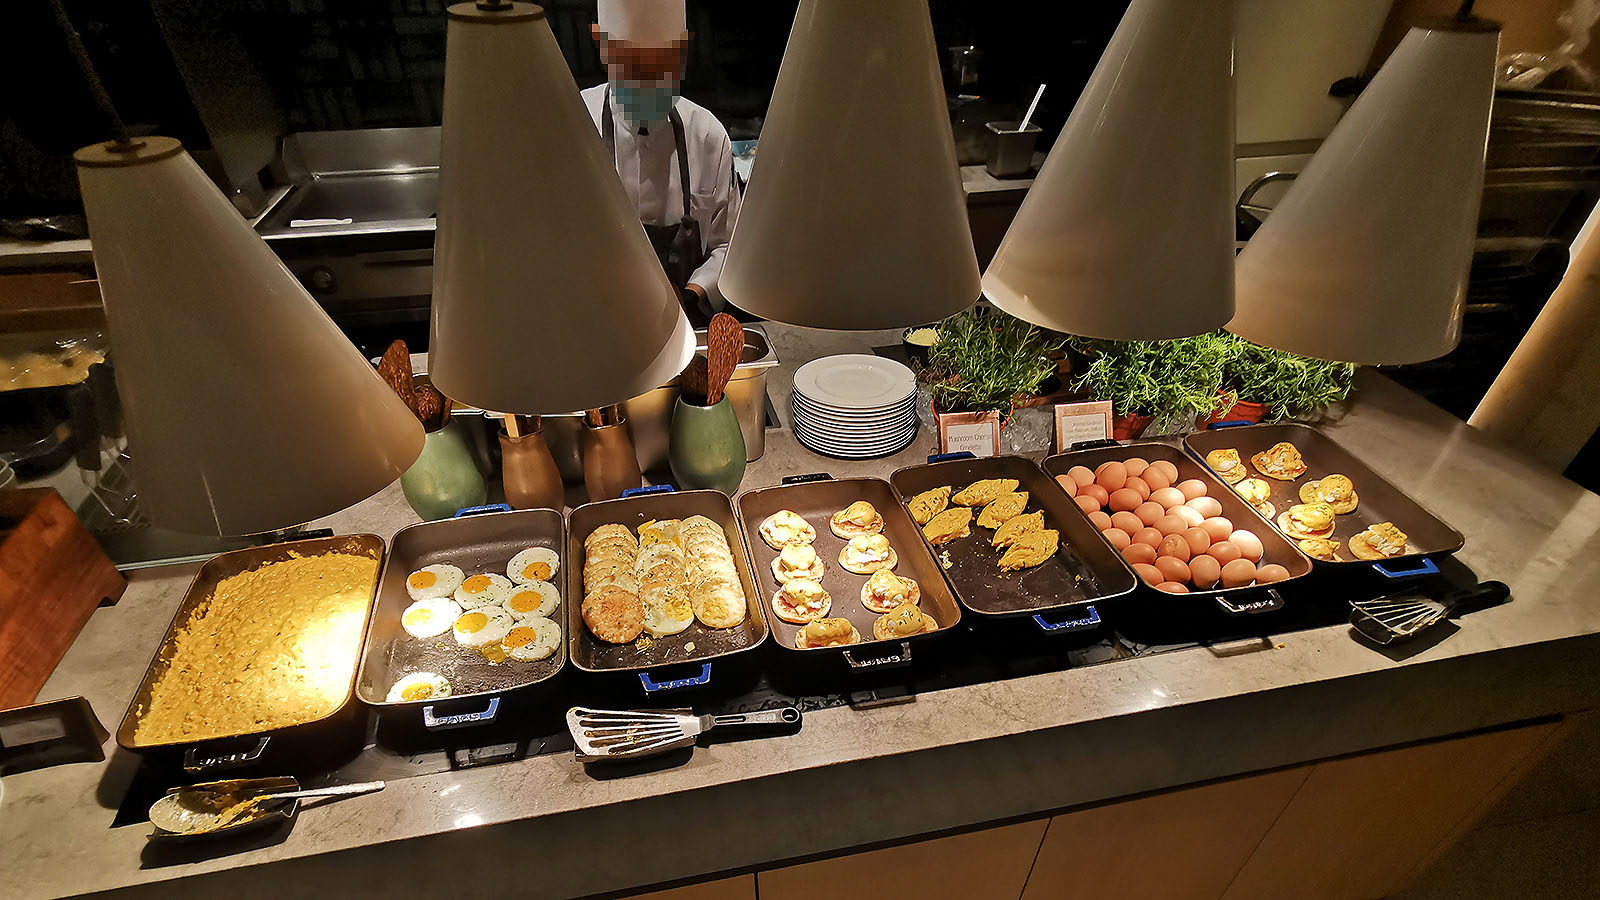 Buffet breakfast at Hilton Singapore Orchard hotel